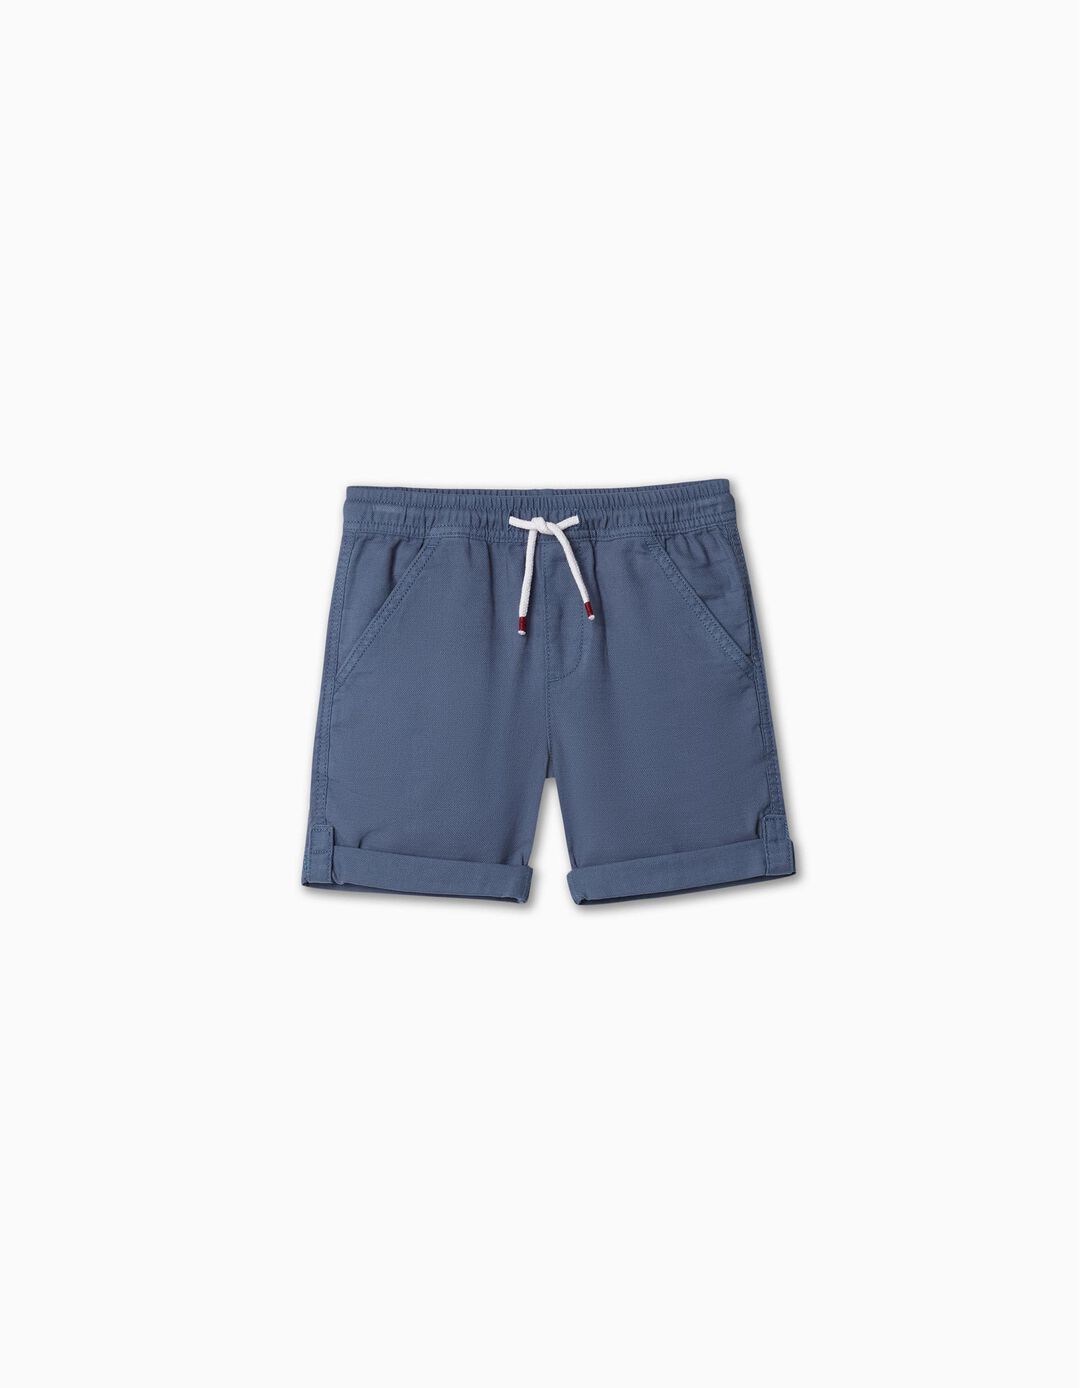 Self-Adhering Strip Shorts, Boy, Dark Blue